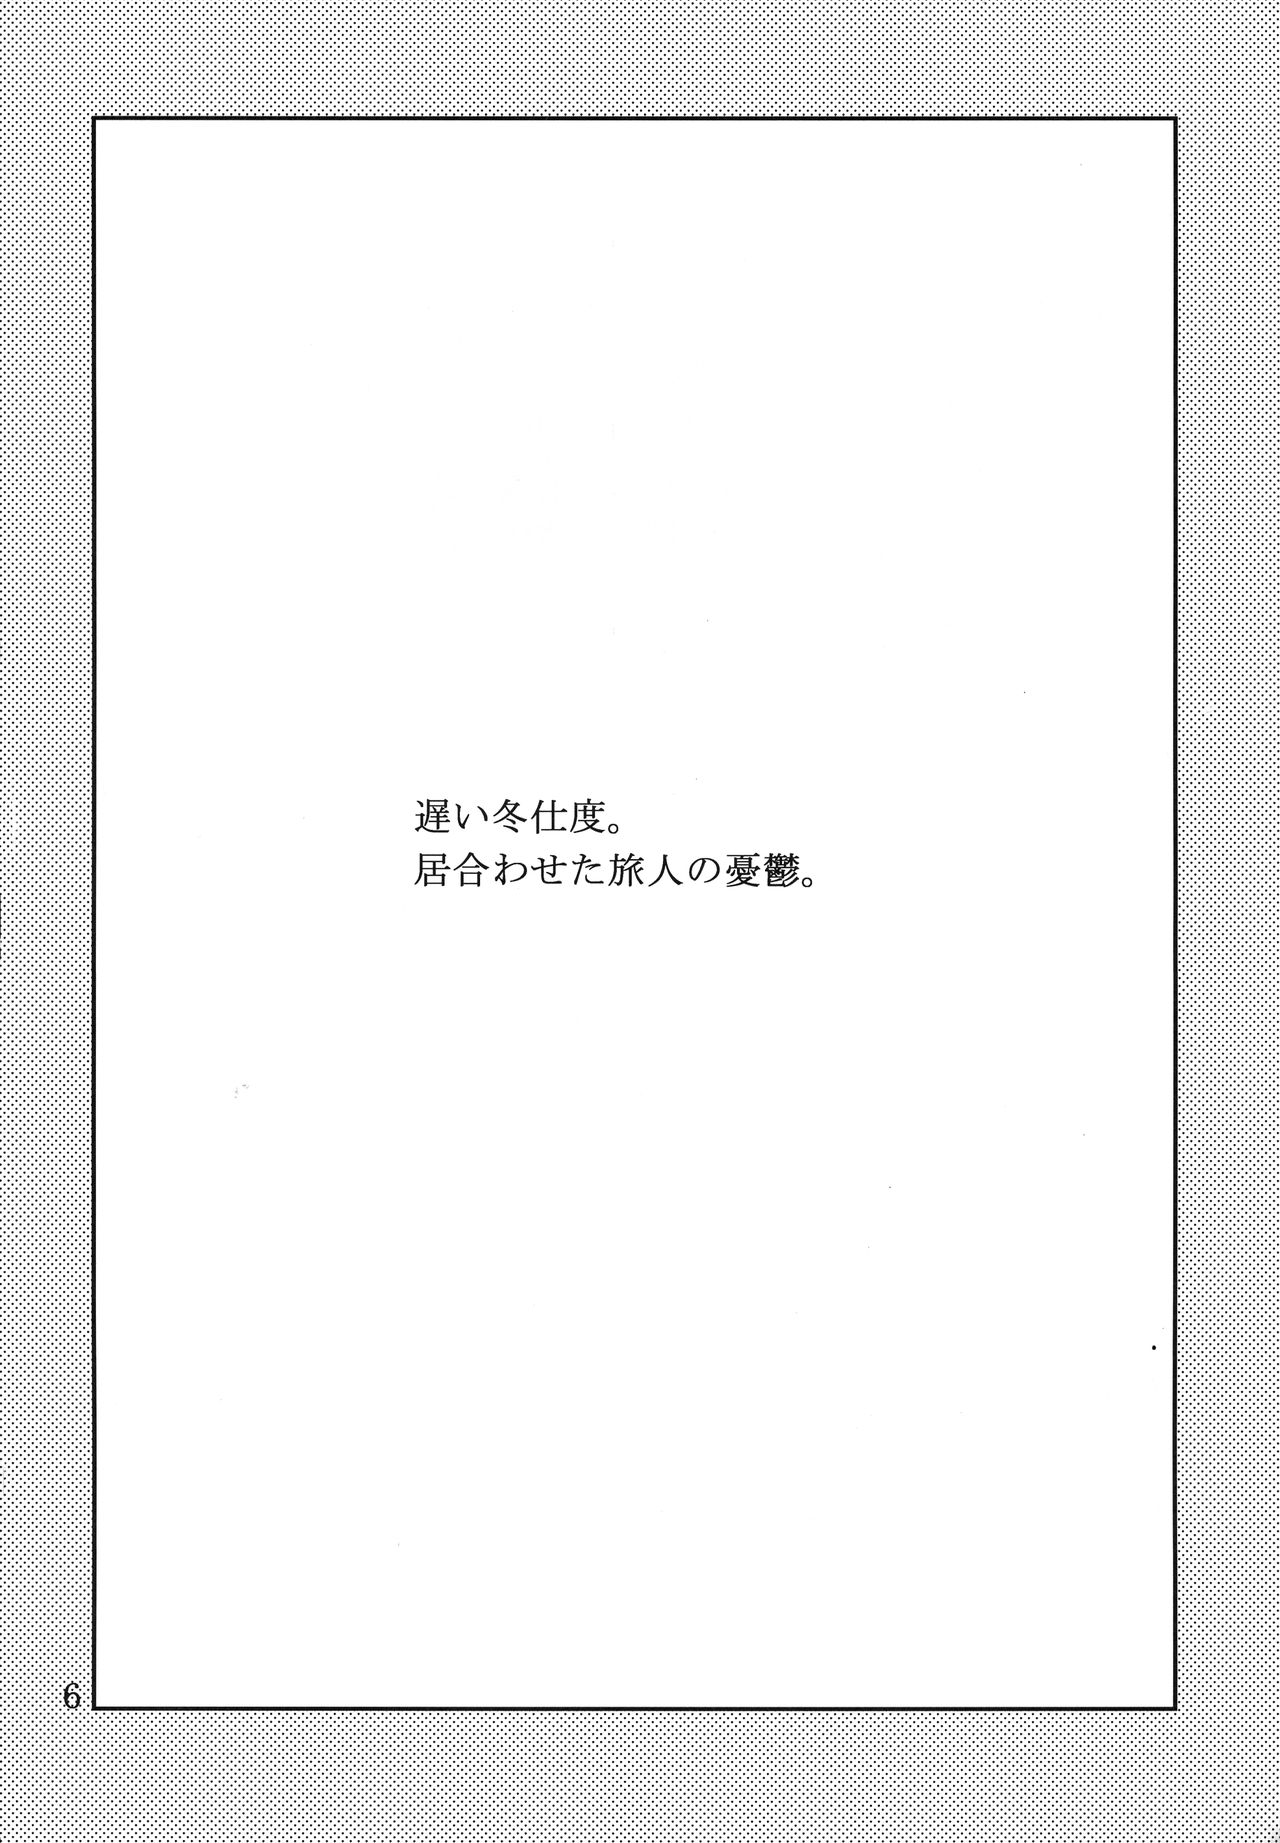 (C75) [へっぽこ堂 (電SUKE)] Material Handling Vol.4 (ファイナルファンタジー VII)